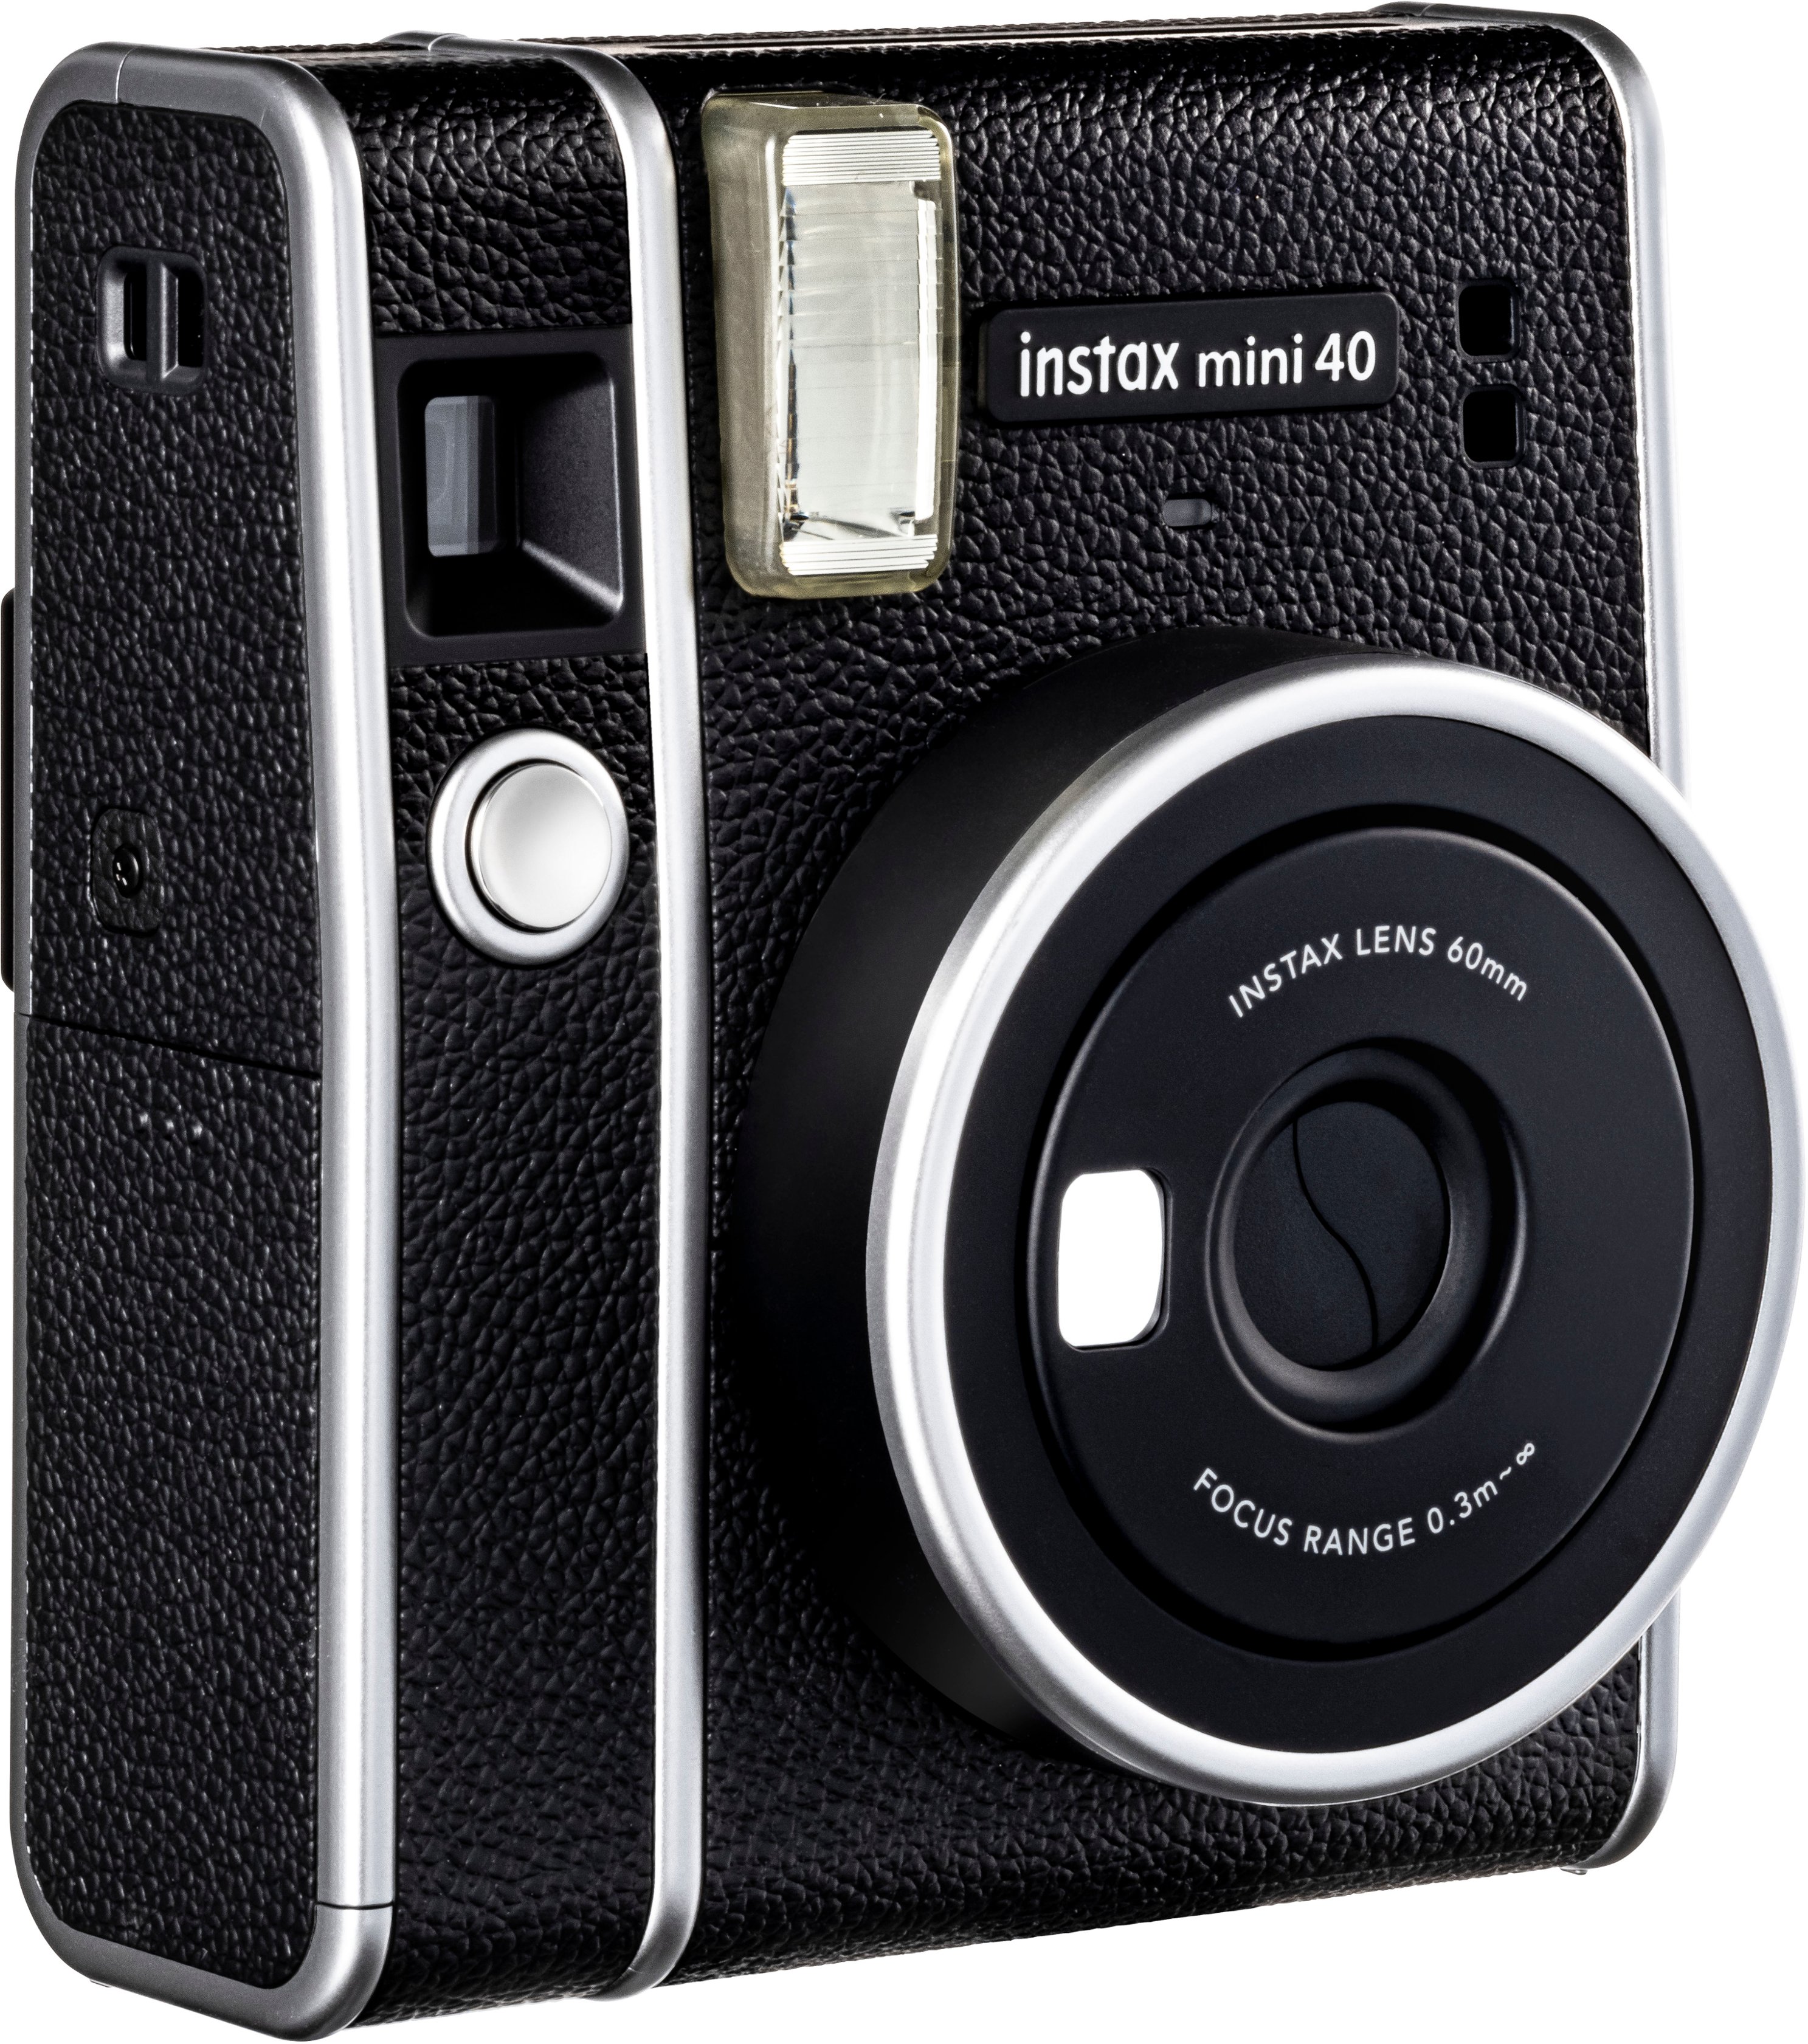 Angle View: Canon - PowerShot G5 X Mark II 20.1-Megapixel Digital Camera - Black